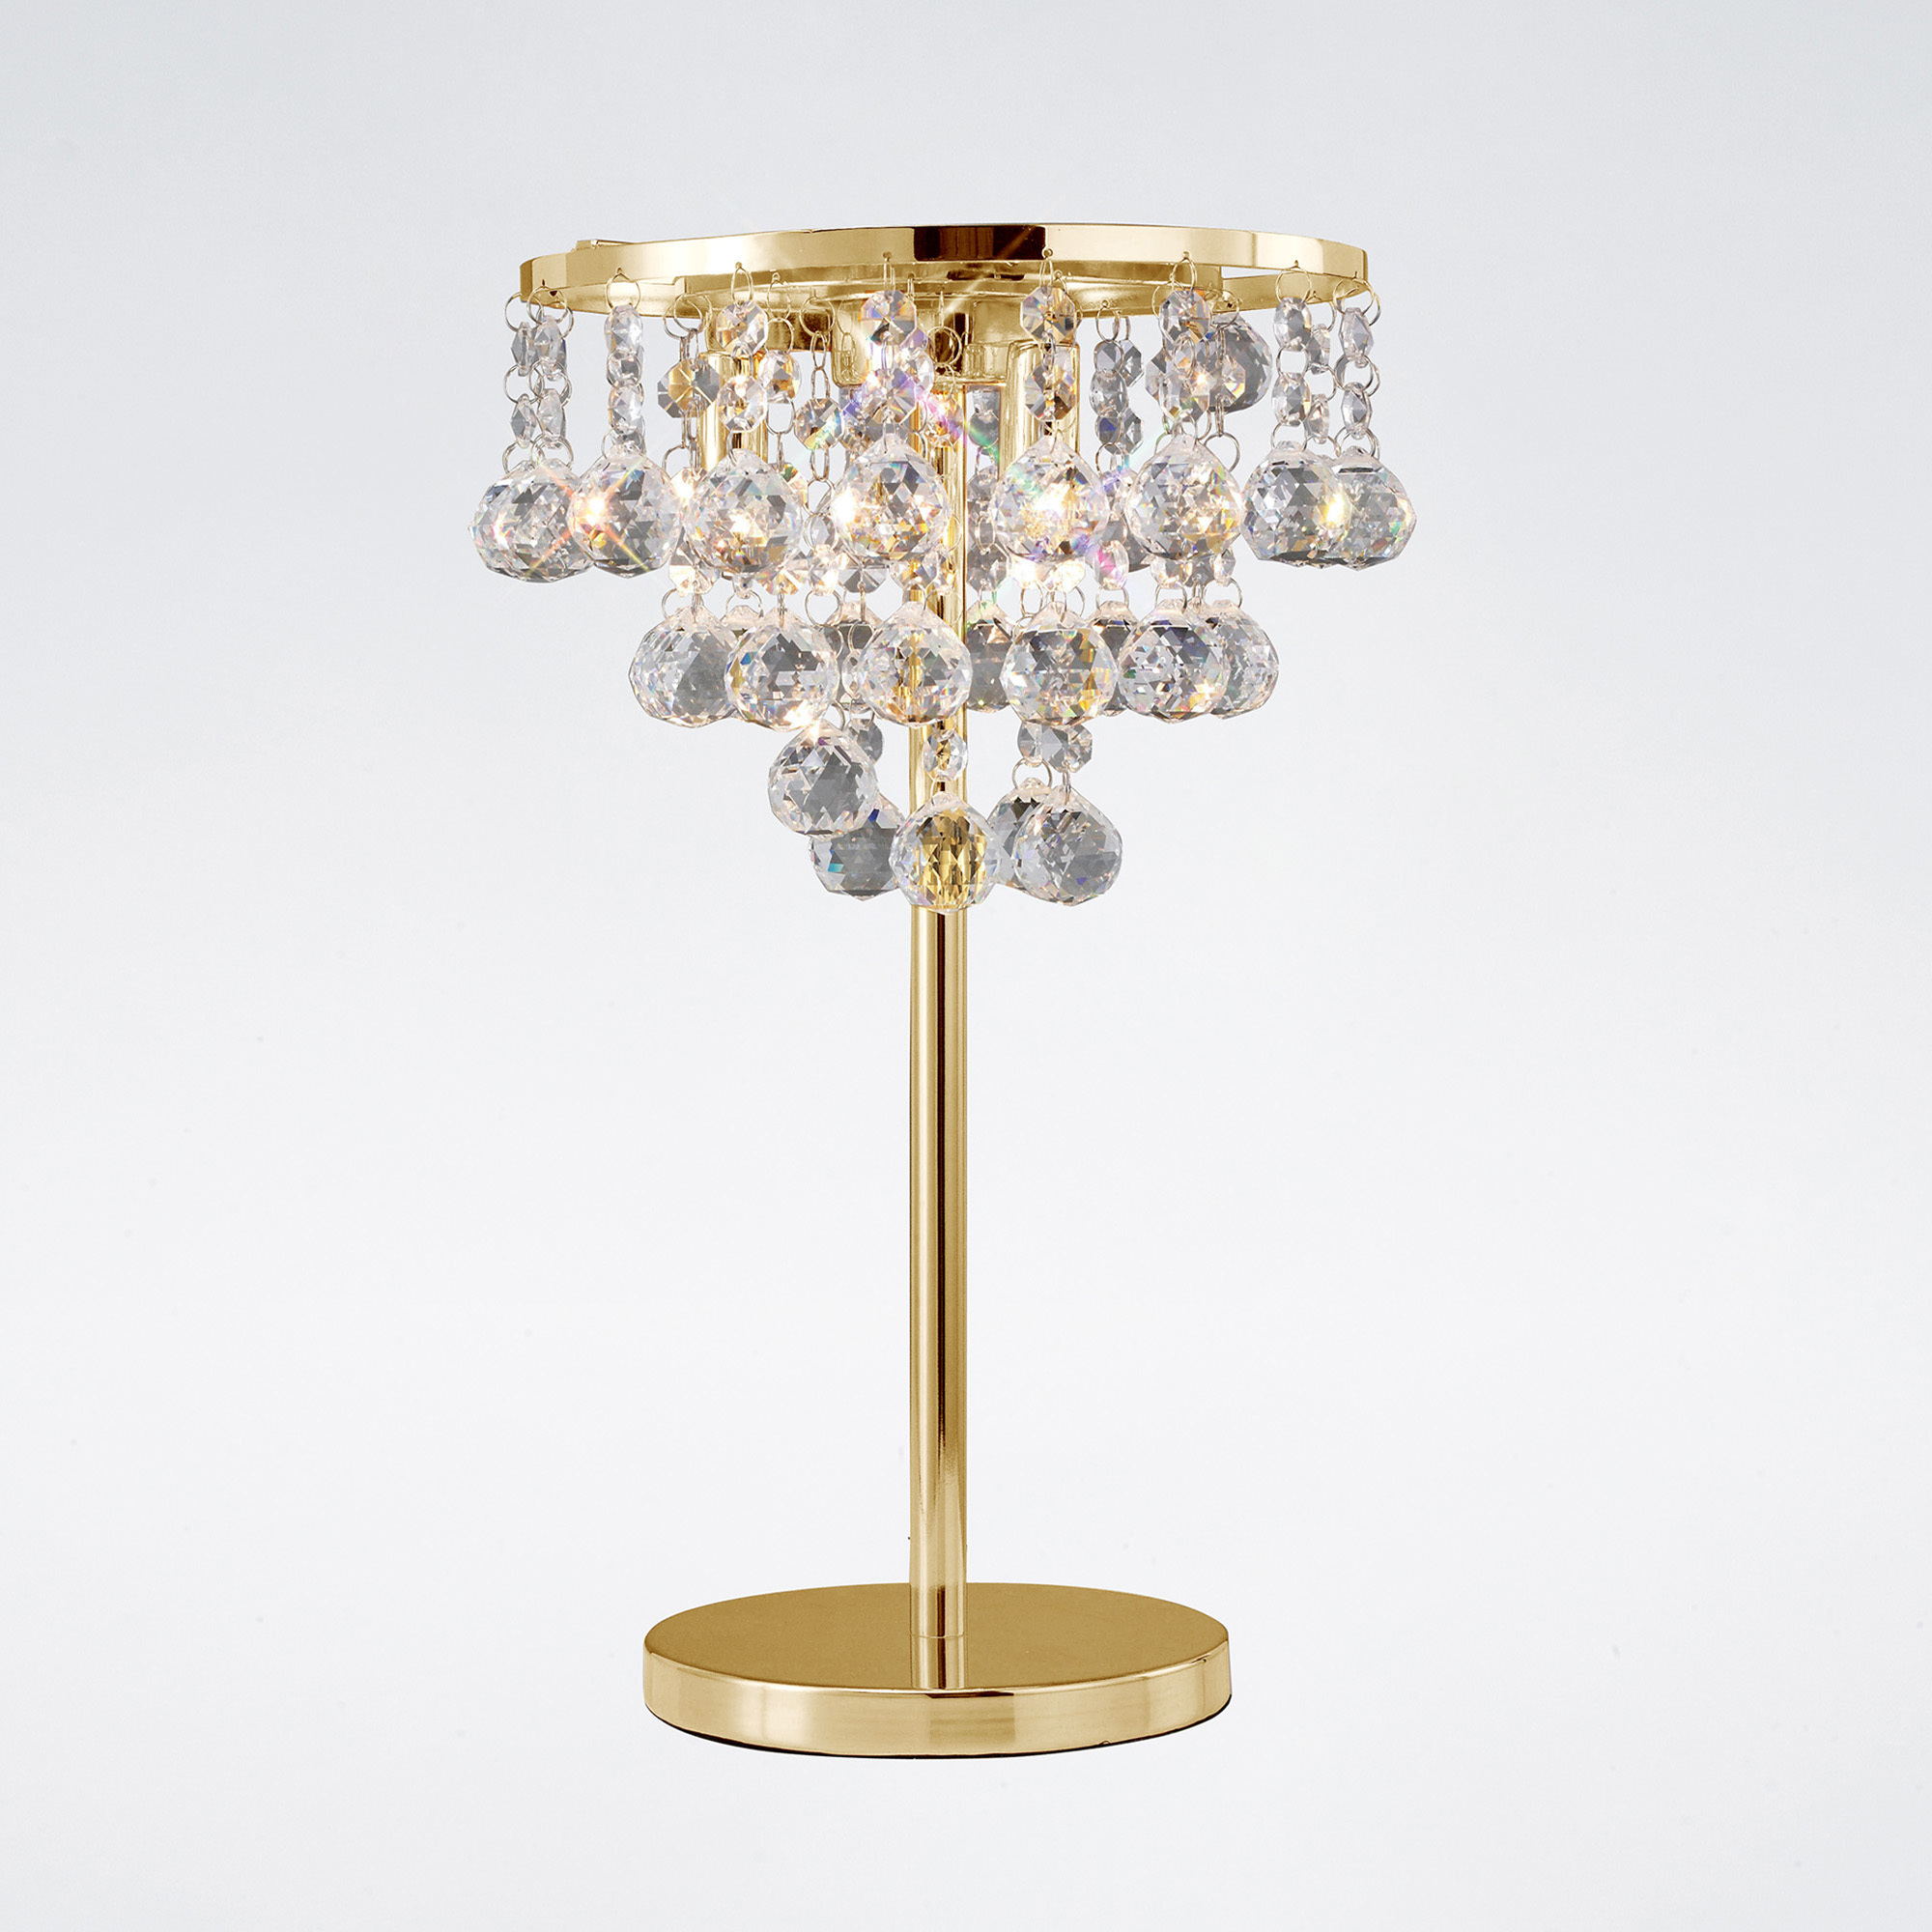 Atla Crystal Table Lamps Diyas Designer Table Lamps